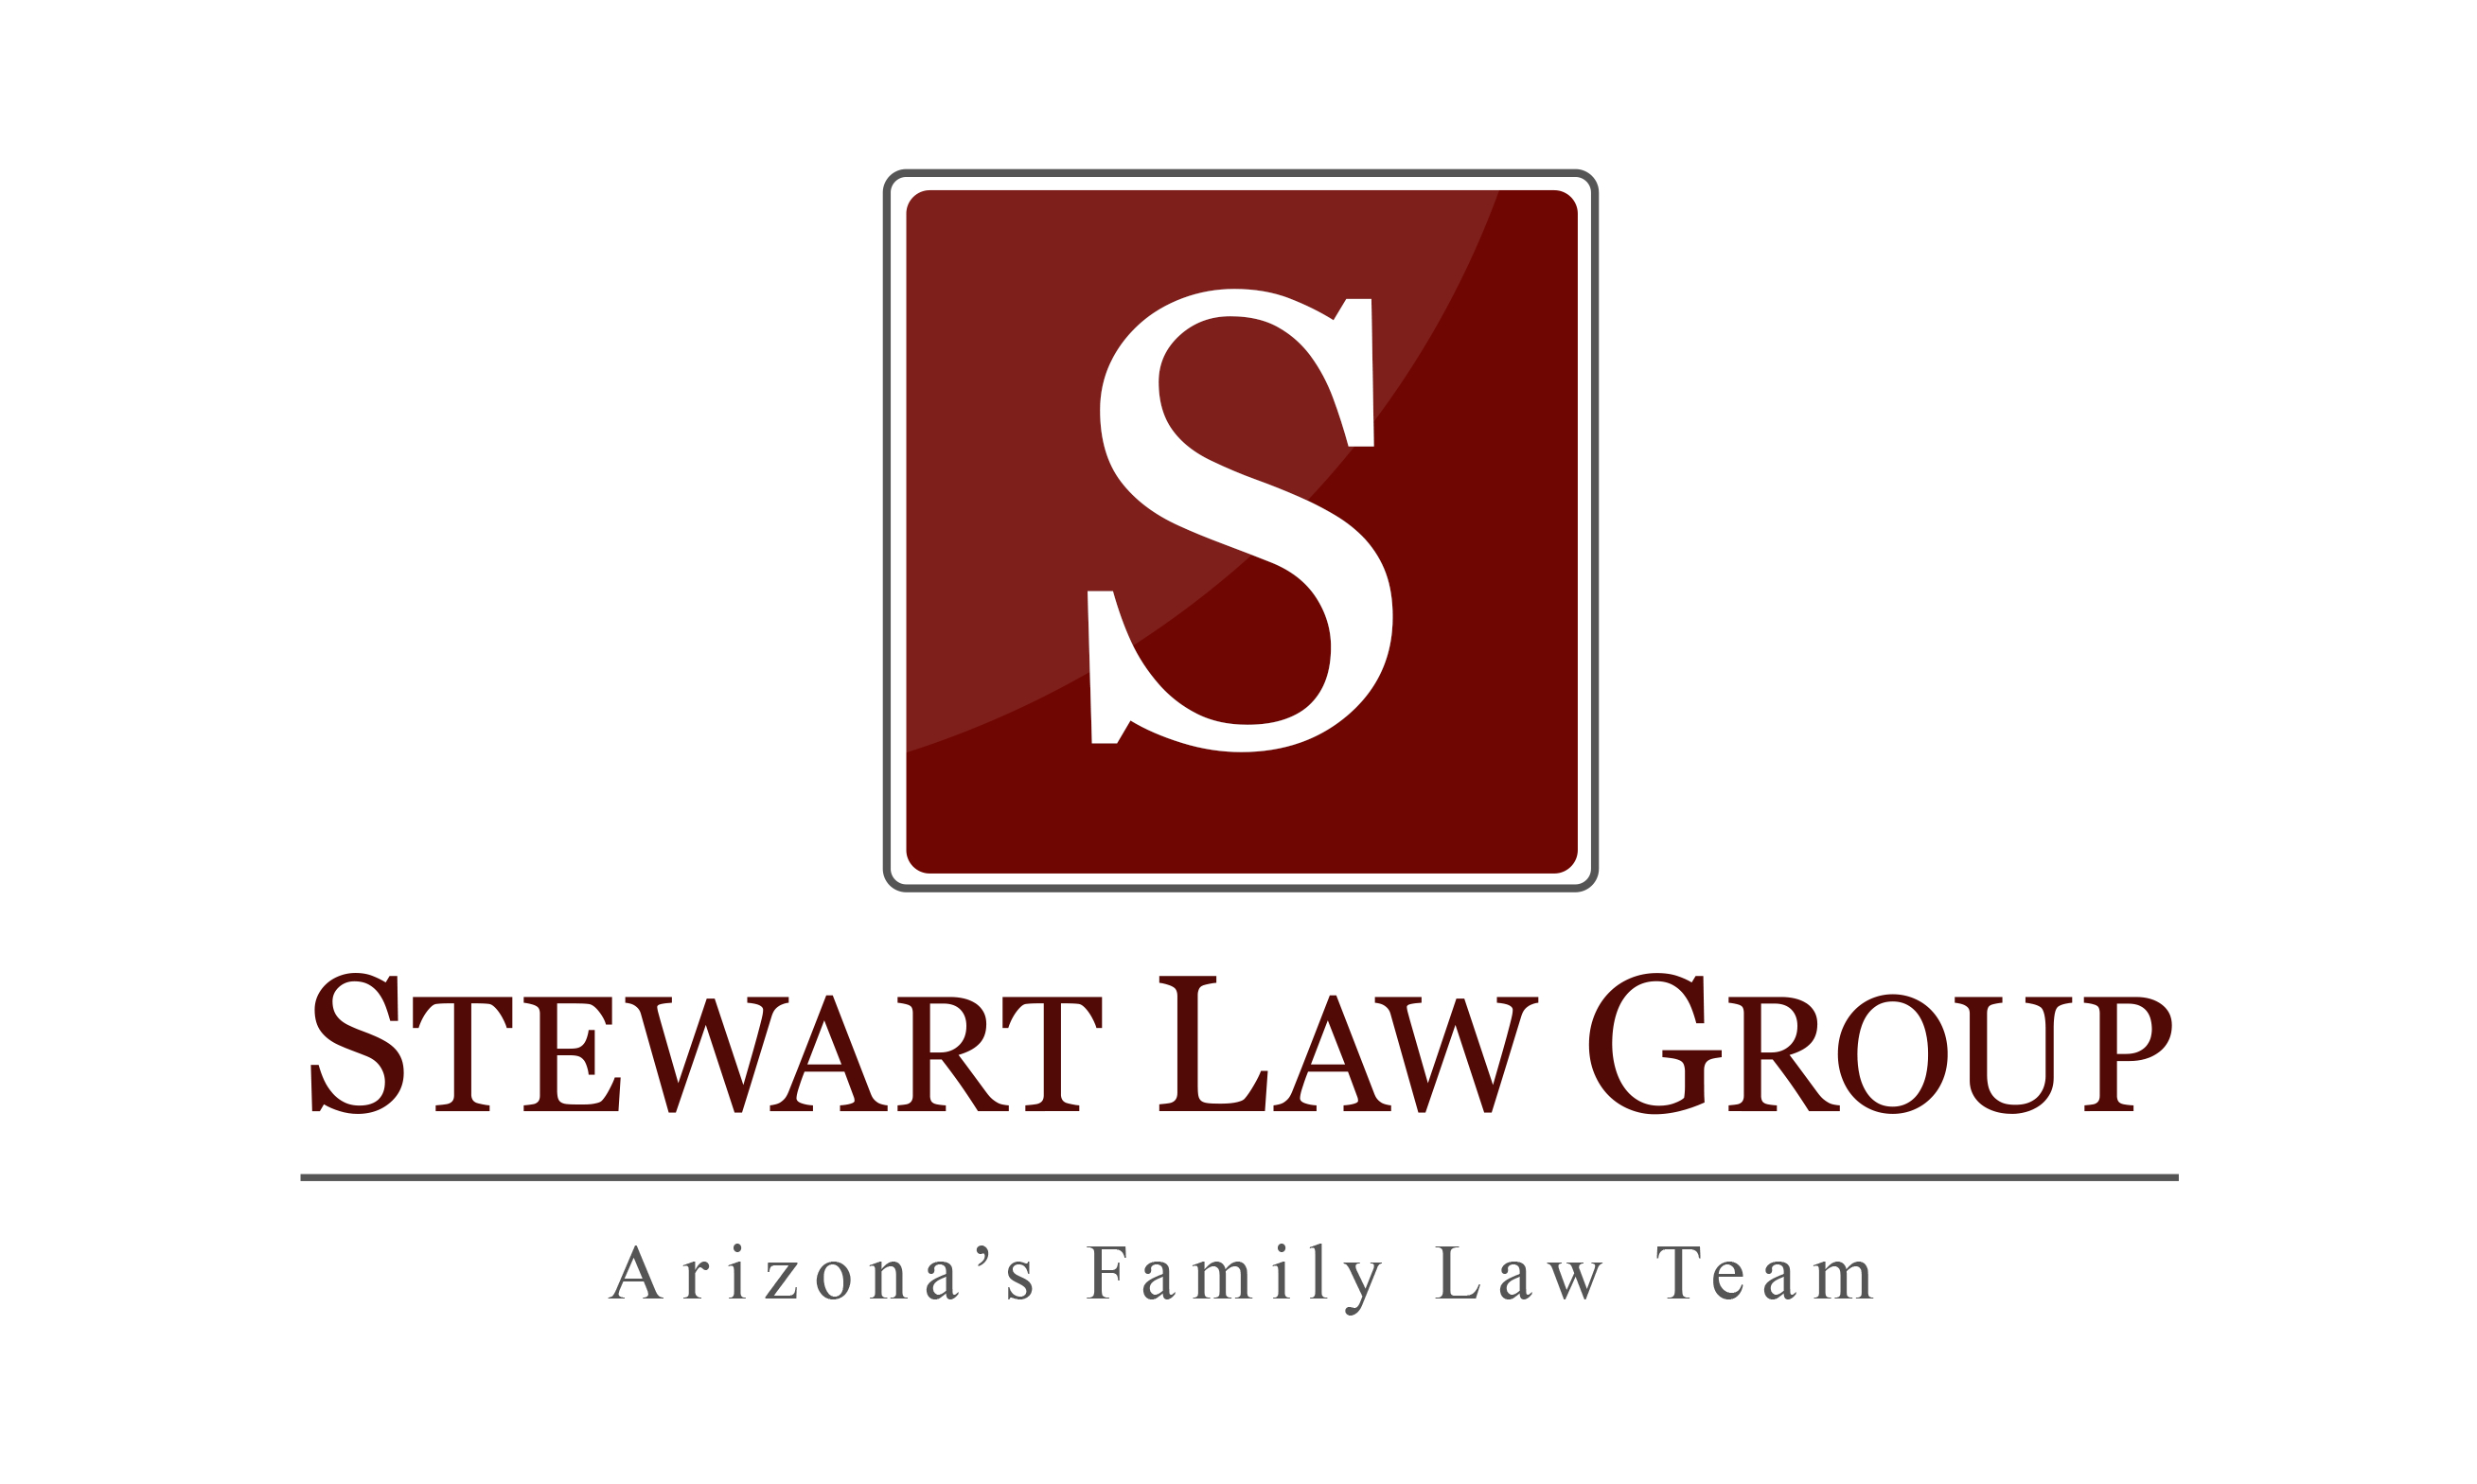 Stewart Law Group, Mogli SMS & WhatsApp client